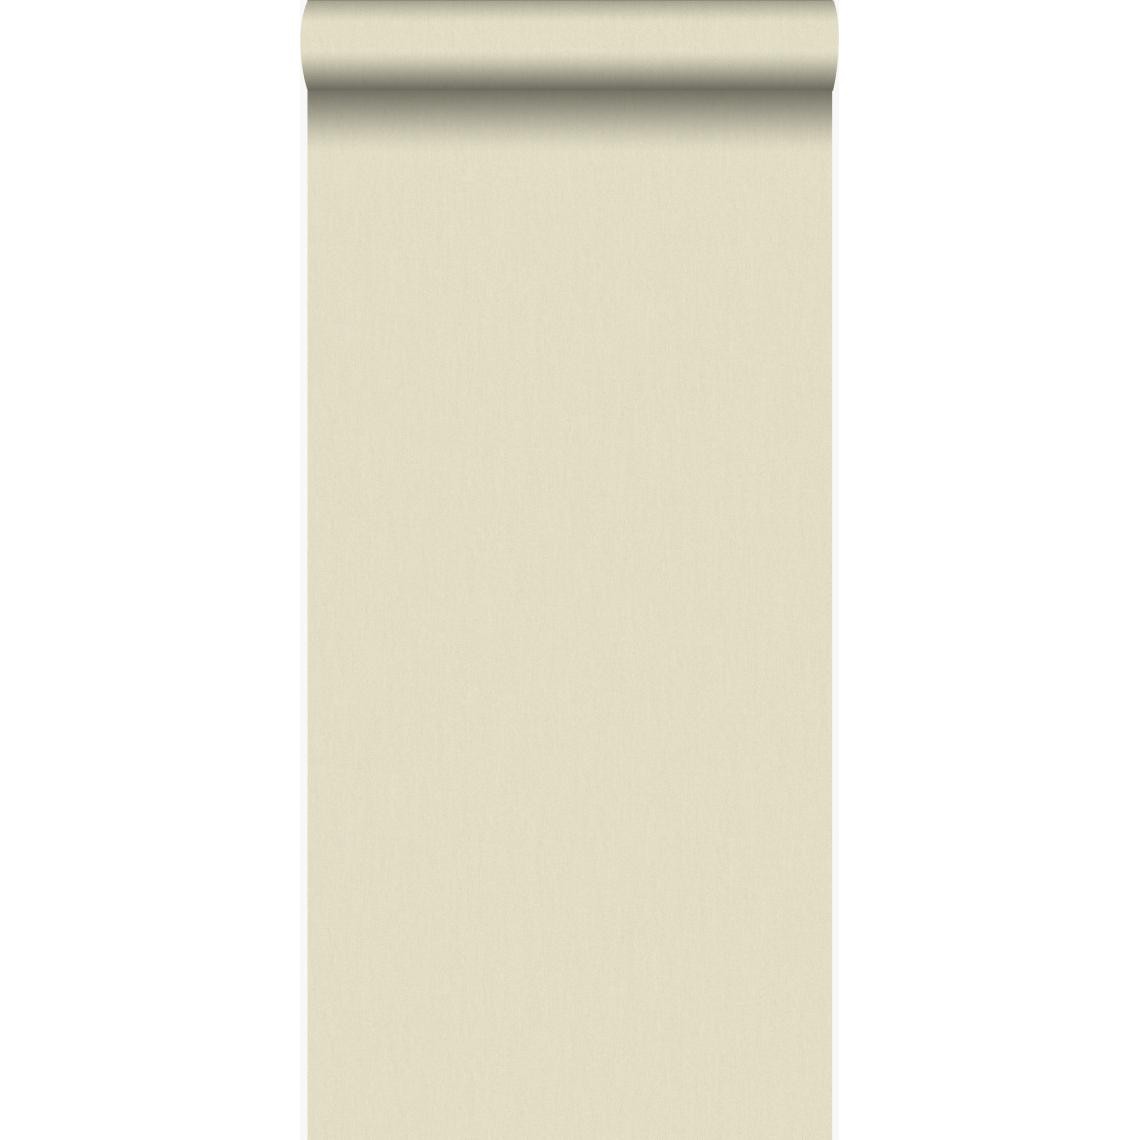 Origin - Origin papier peint lin beige chaud - 347011 - 53 cm x 10,05 m - Papier peint